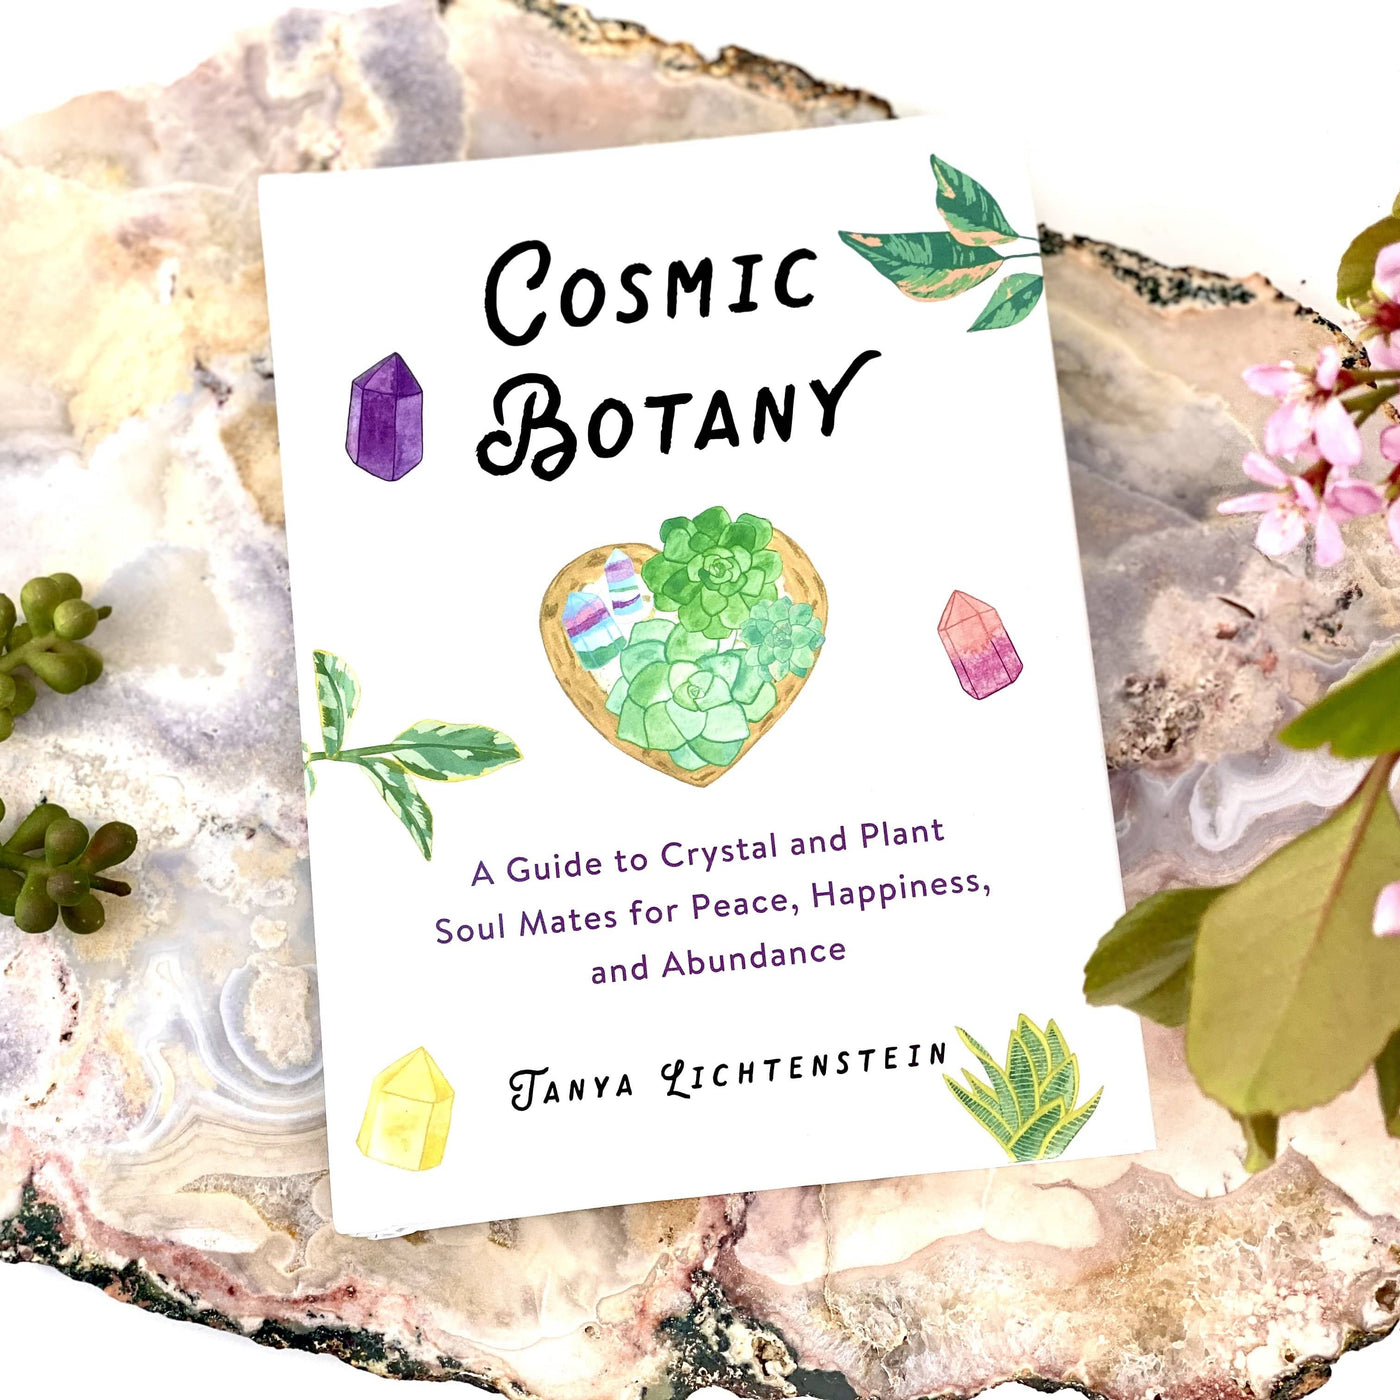 Cosmic Botany Book on agate slice